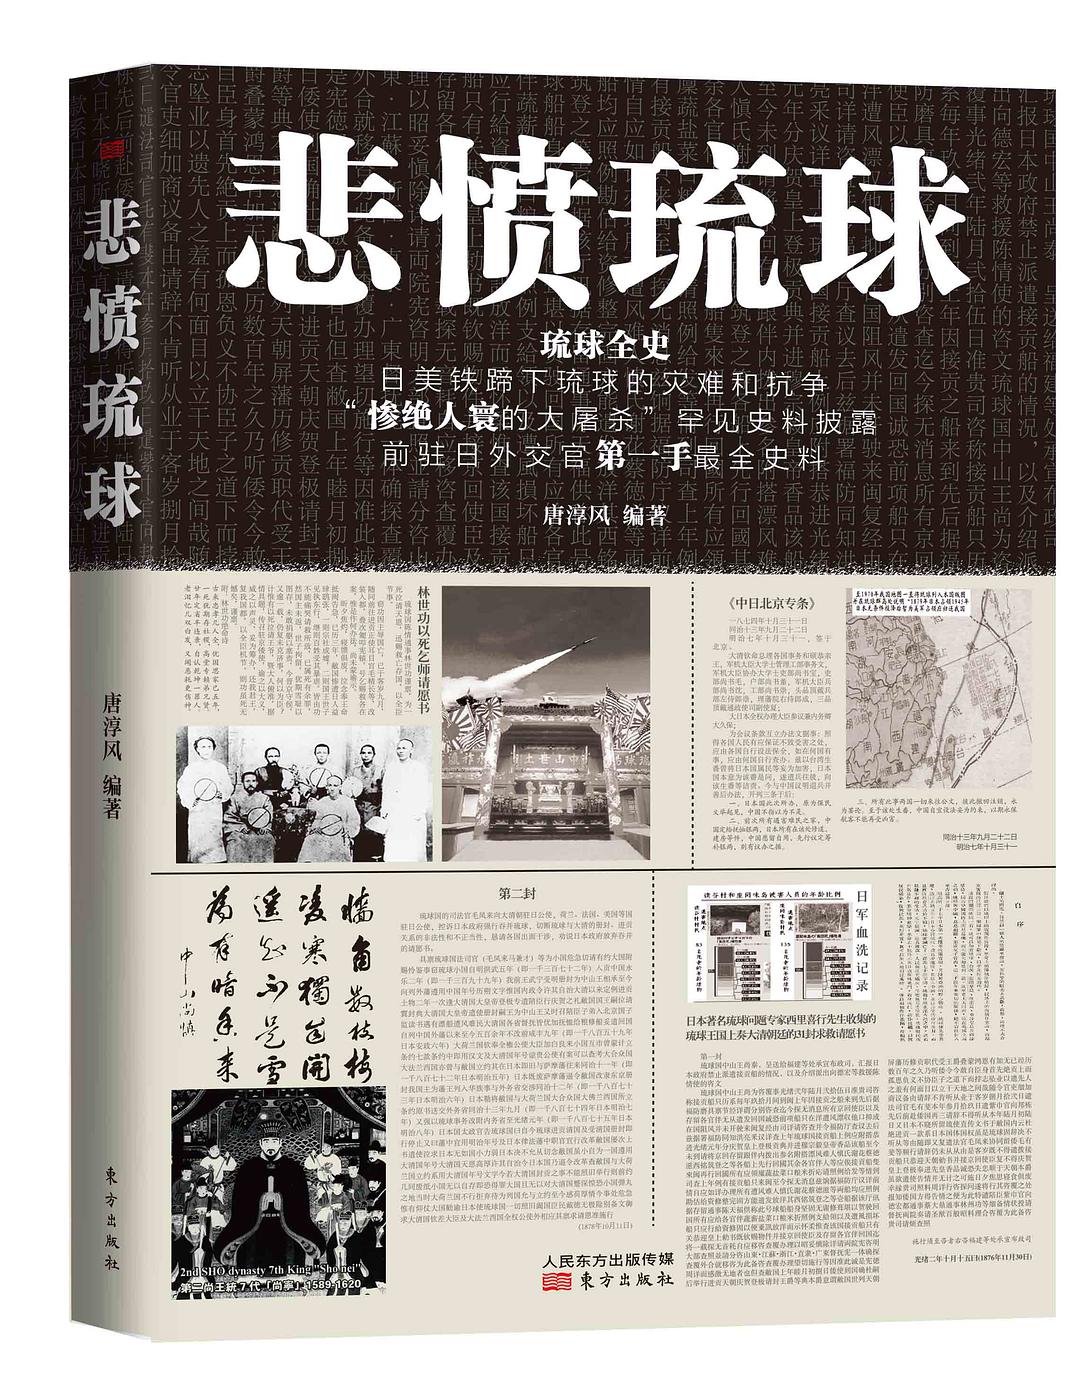 唐淳风: 悲愤琉球 (Paperback, 简体中文 language, 2015, 东方出版社)